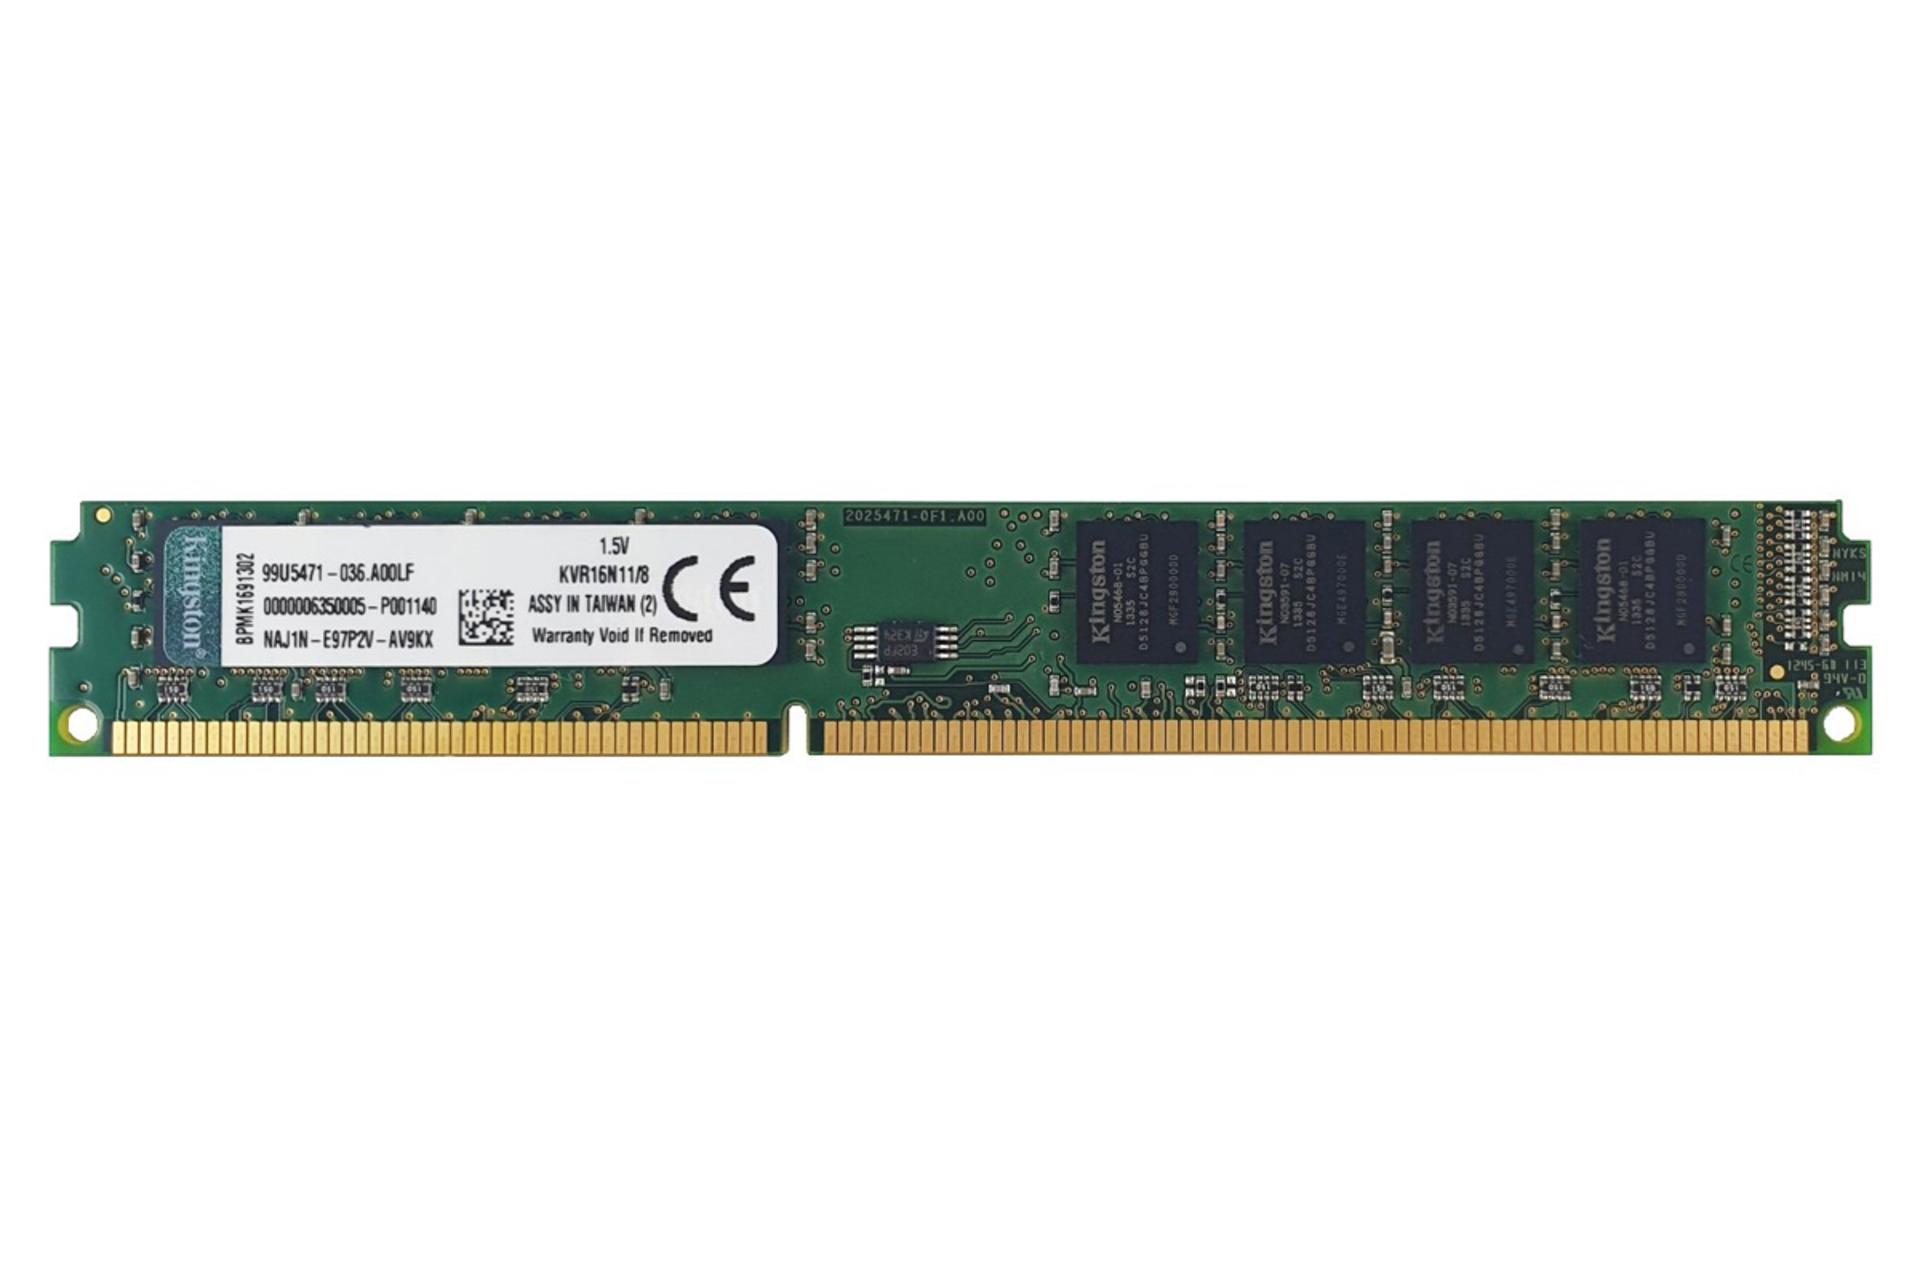 مرجع متخصصين ايران نماي جلو رم كينگستون Value Ram ظرفيت 8 گيگابايت از نوع DDR3-1600